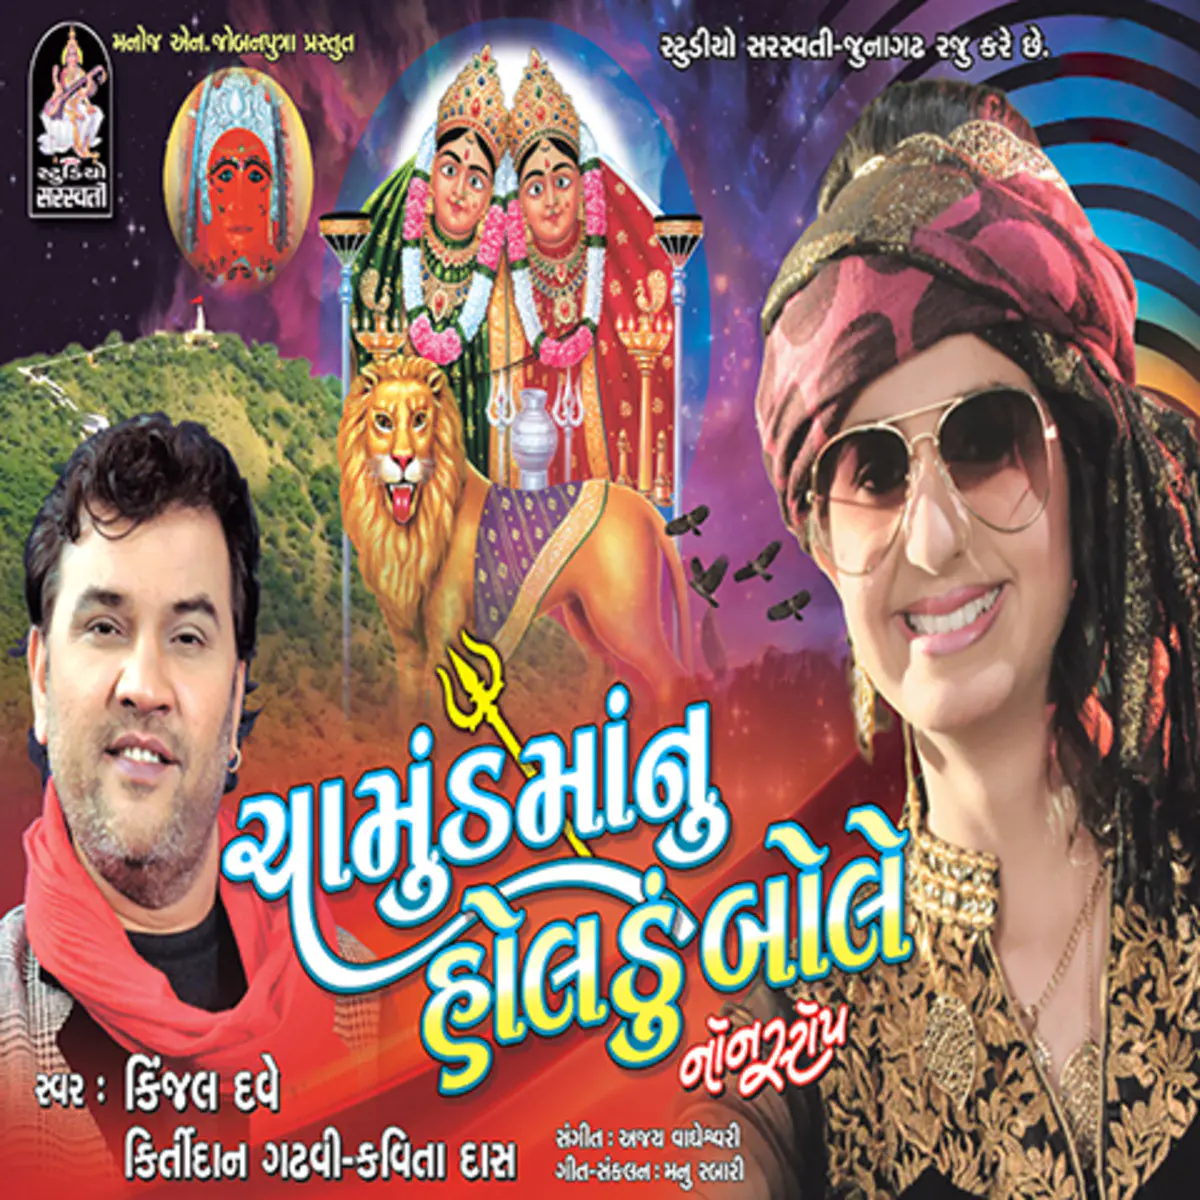 Chamunda Maa Nu Holdu Bole Songs Download Chamunda Maa Nu Holdu Bole Mp3 Gujarati Songs Online Free On Gaana Com